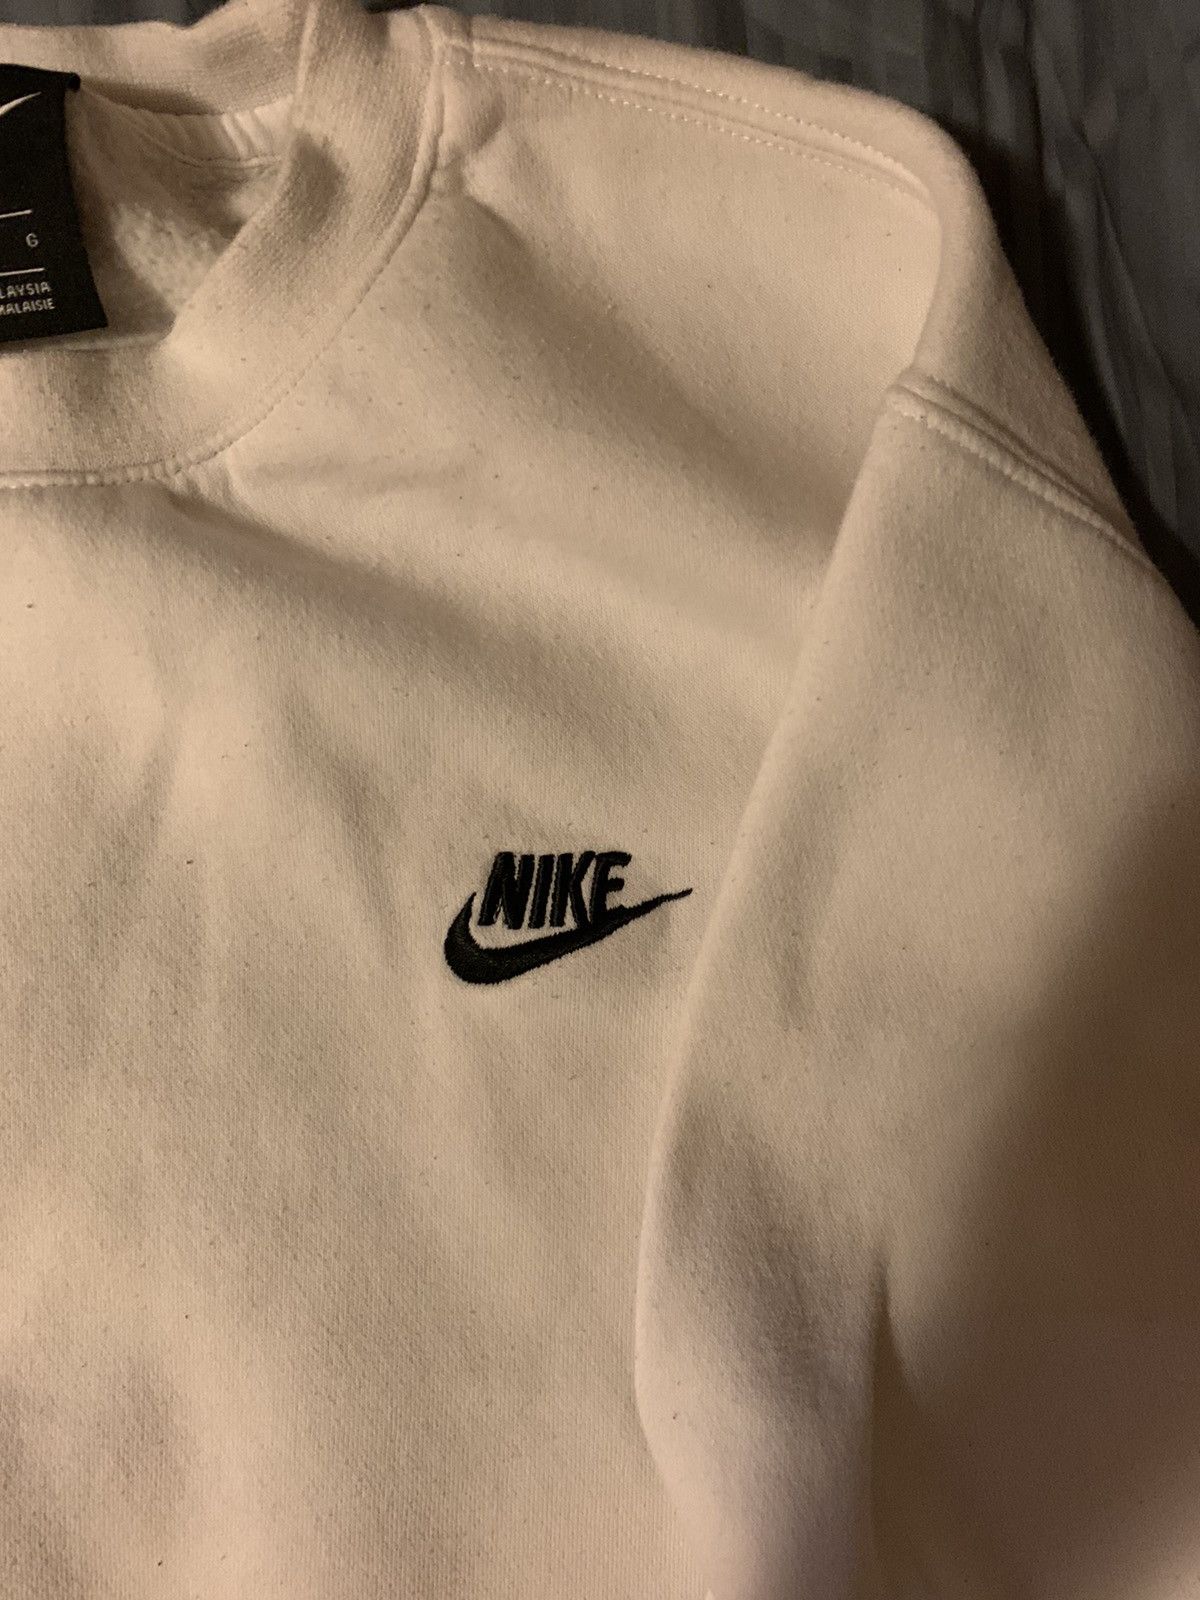 Nike Nike White Sweatshirt Size US M / EU 48-50 / 2 - 2 Preview